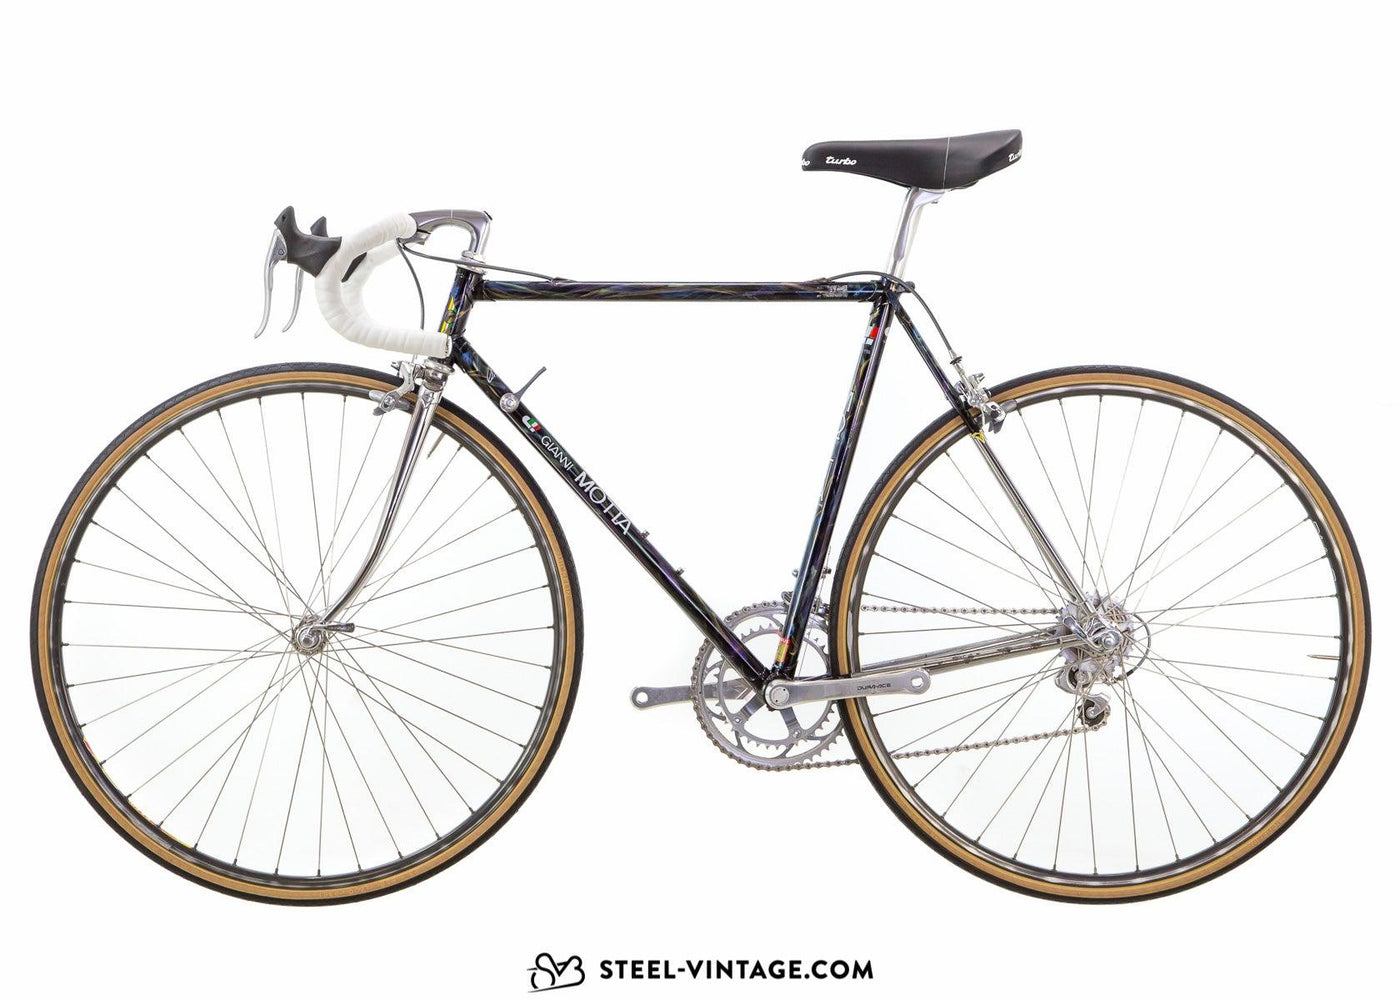 Gianni Motta Personal 2001R Road Bike 1980s - Steel Vintage Bikes